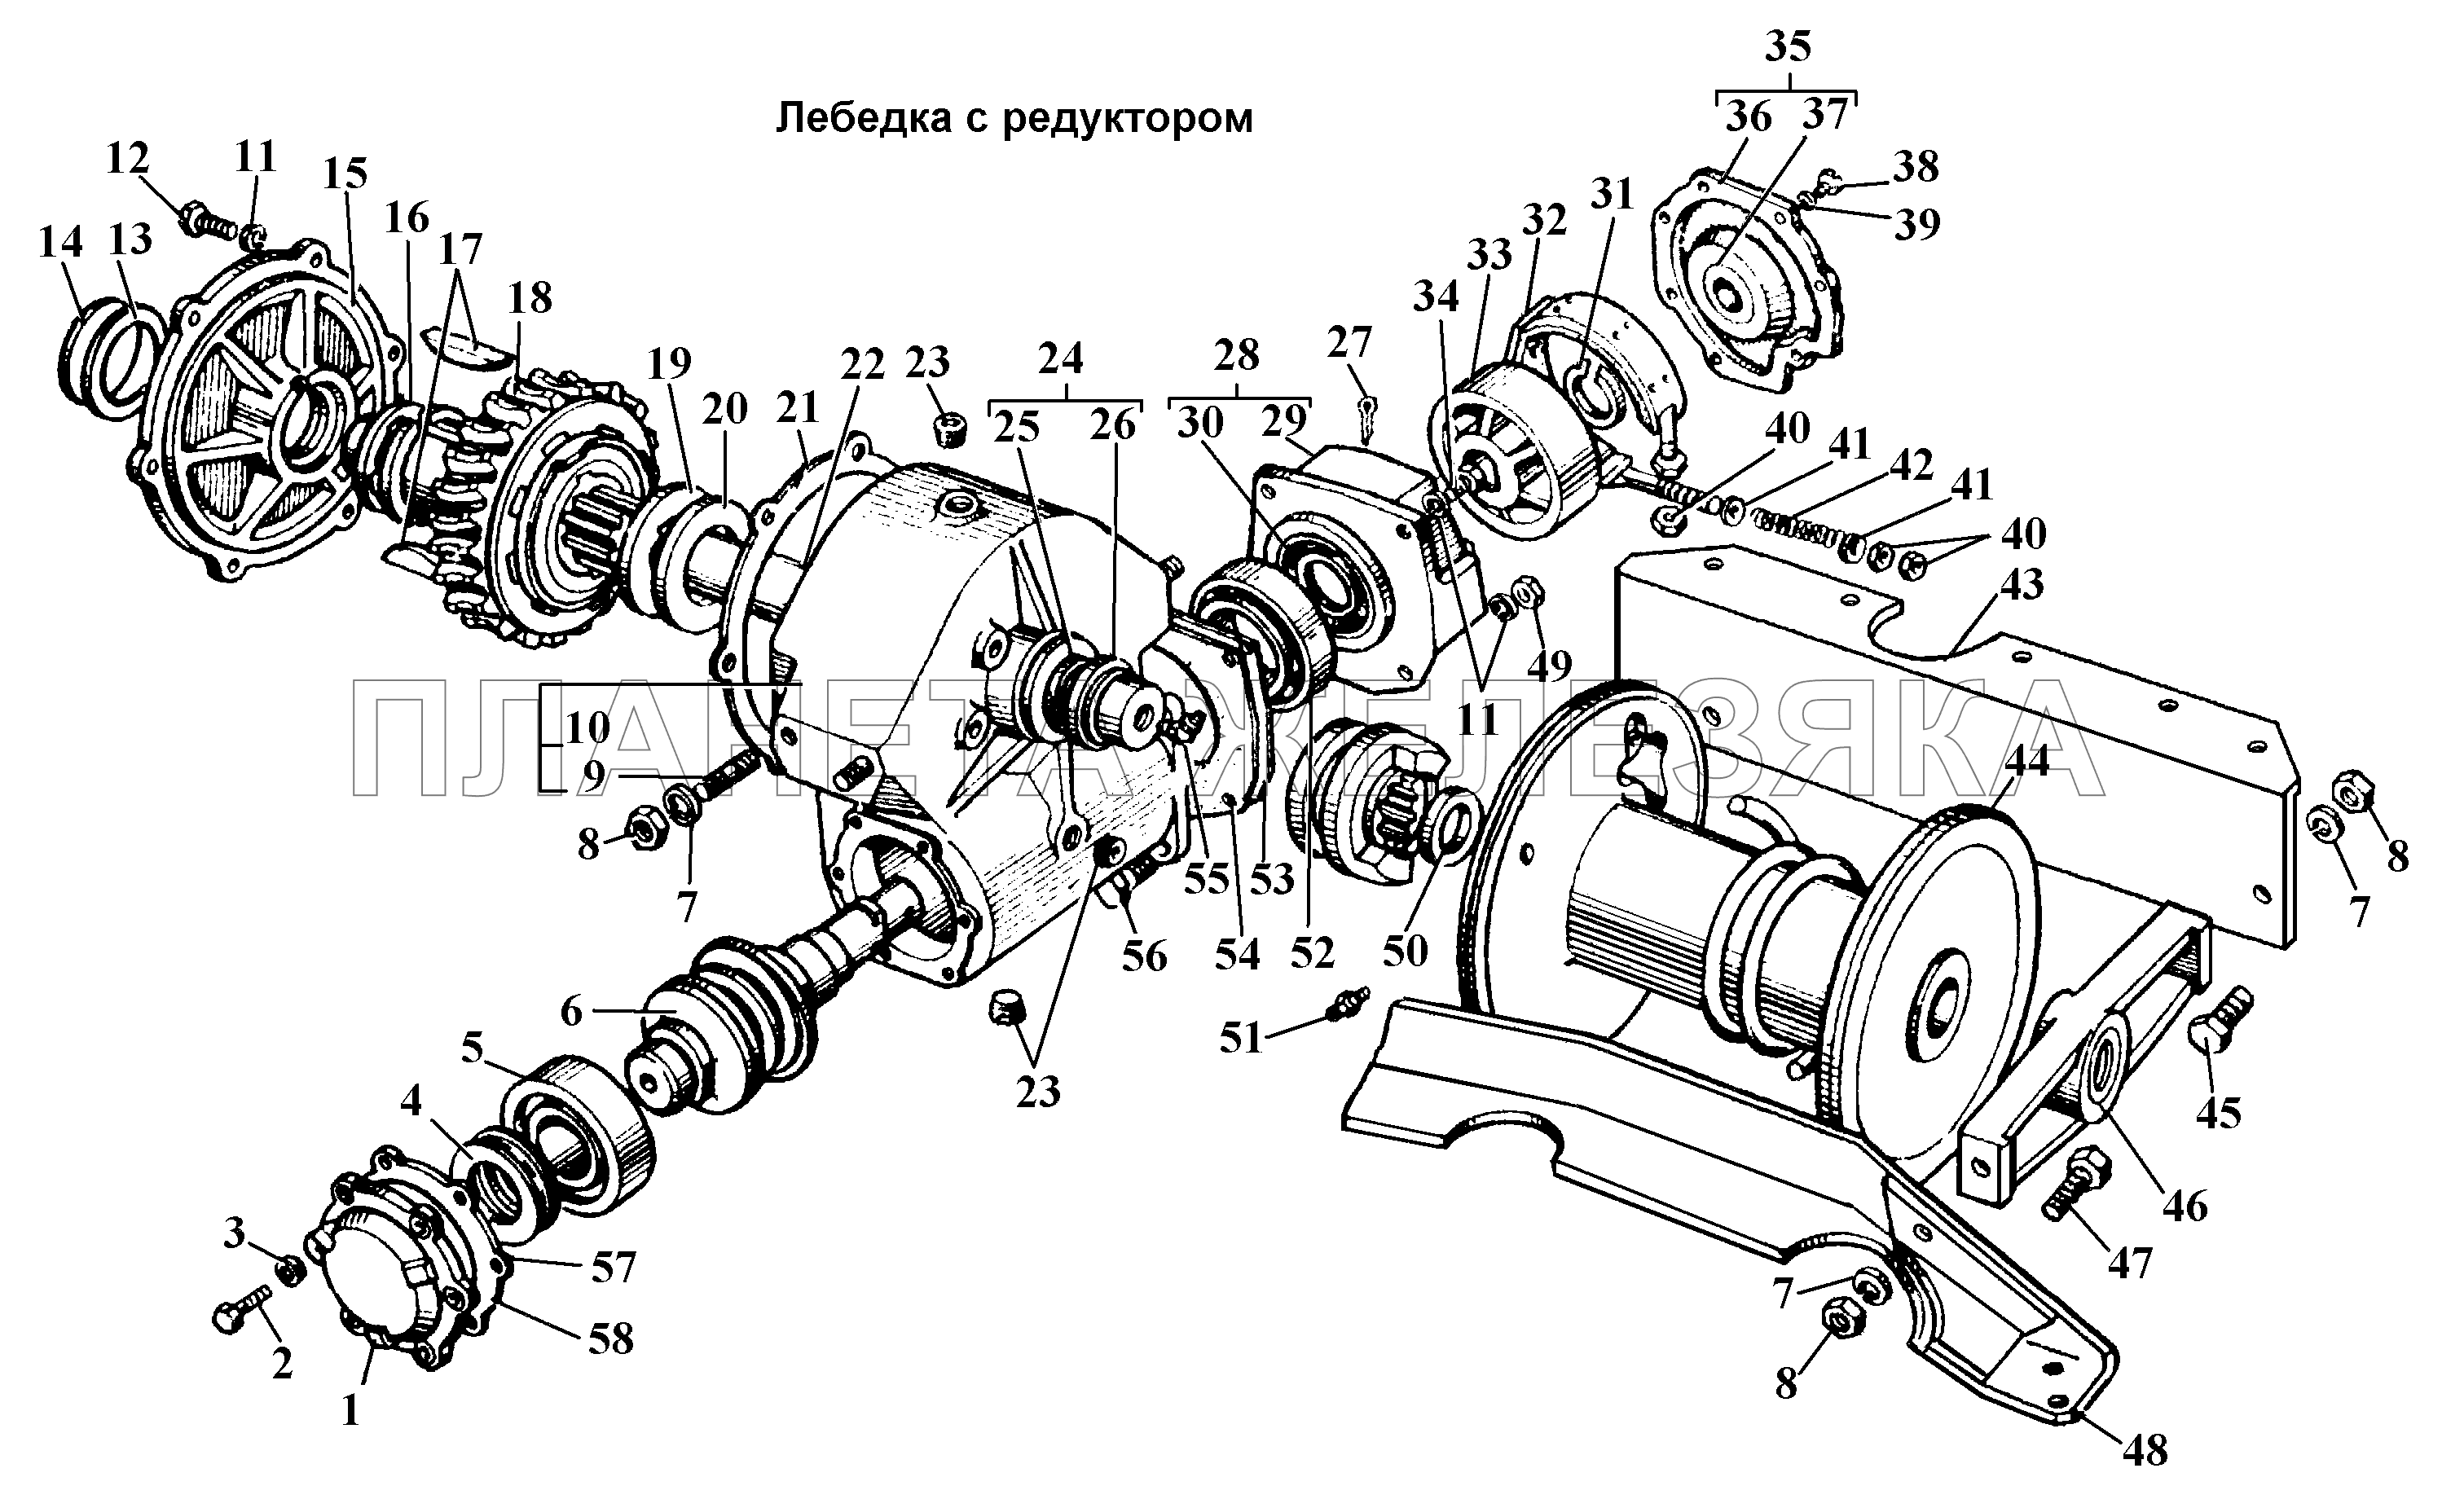 Лебедка с редукторм ГАЗ-3308